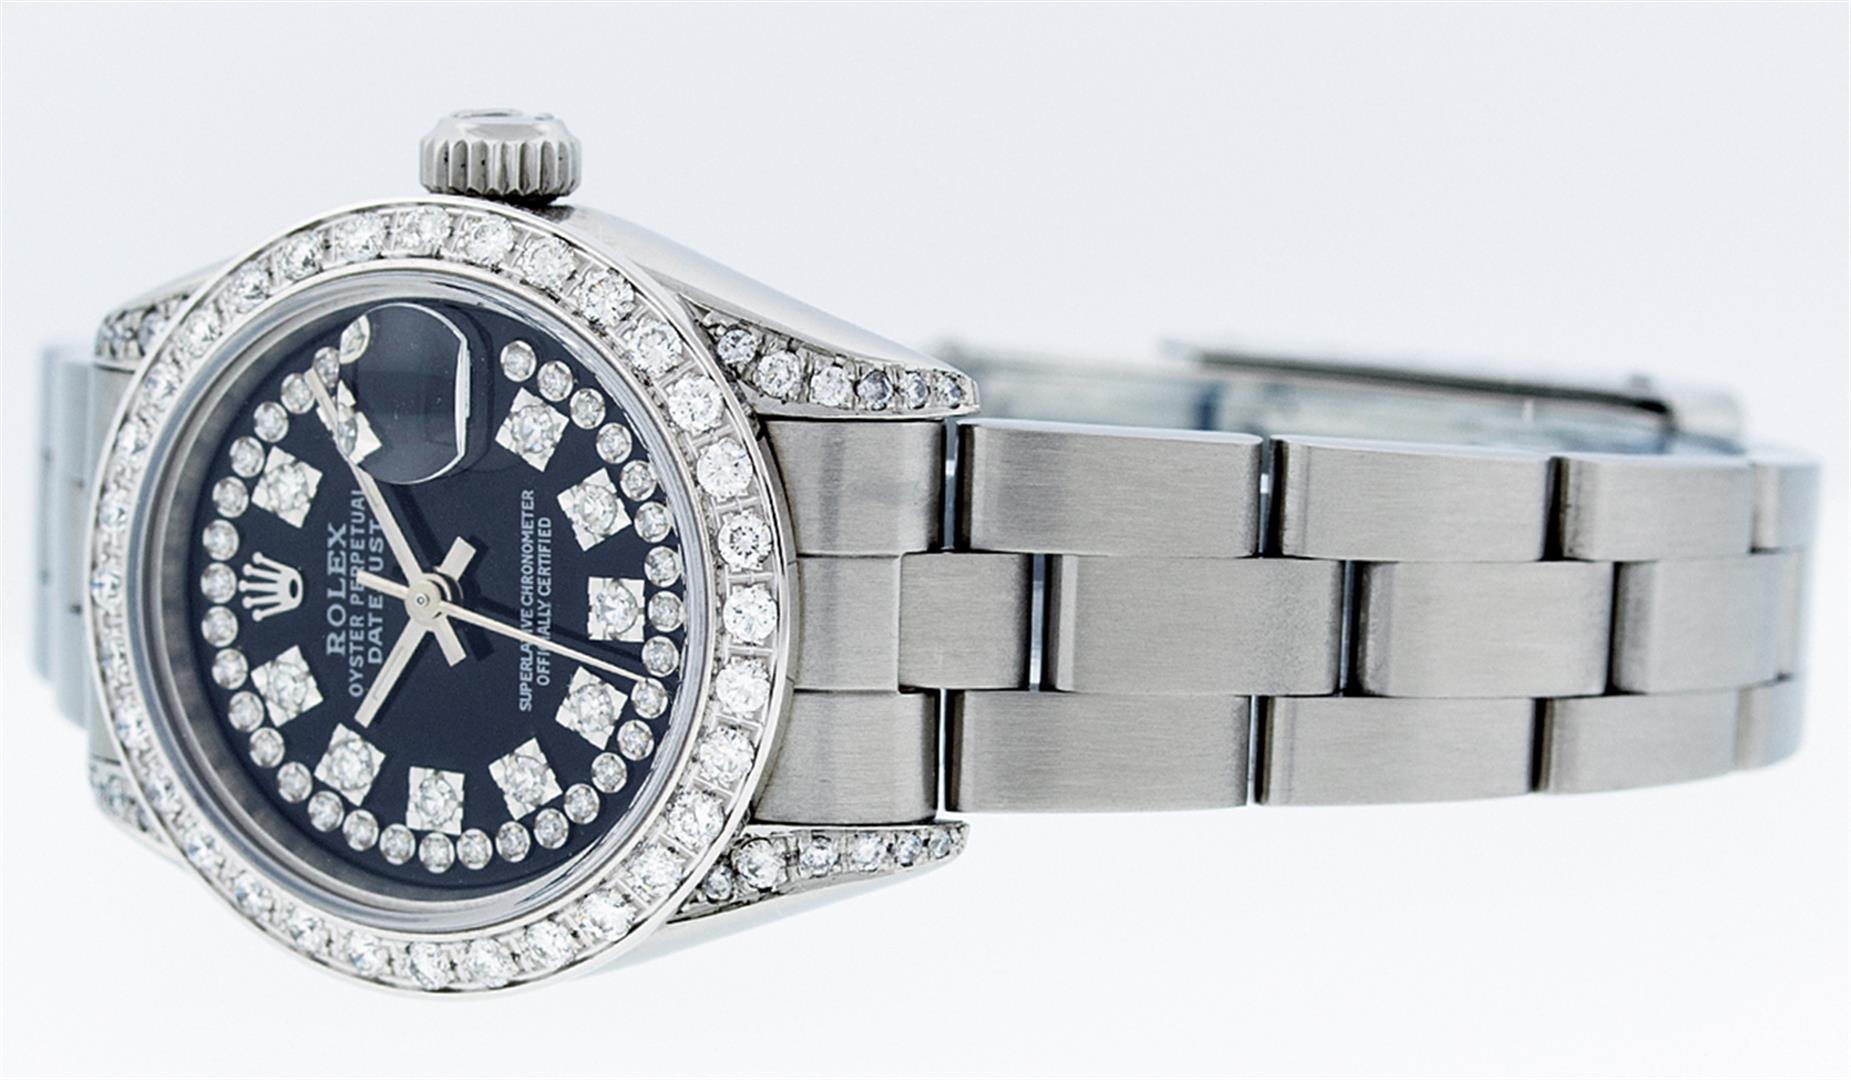 Rolex Ladies SS 26MM Black Diamond Lugs Oyster Quickset Datejust Wristwatch With